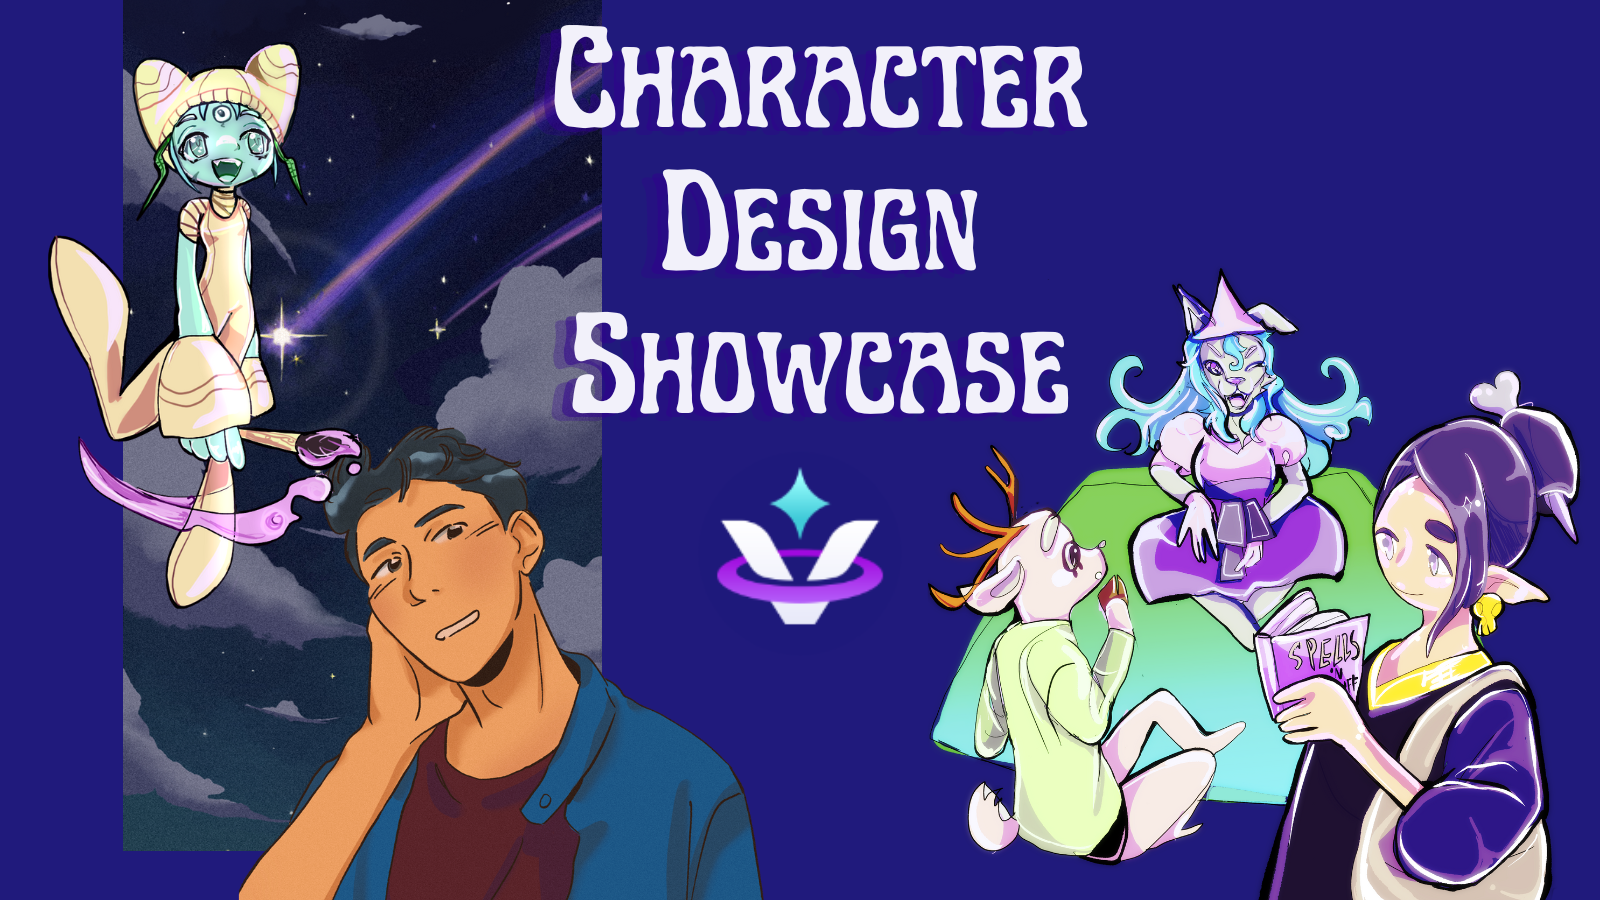 Character Design Showcase